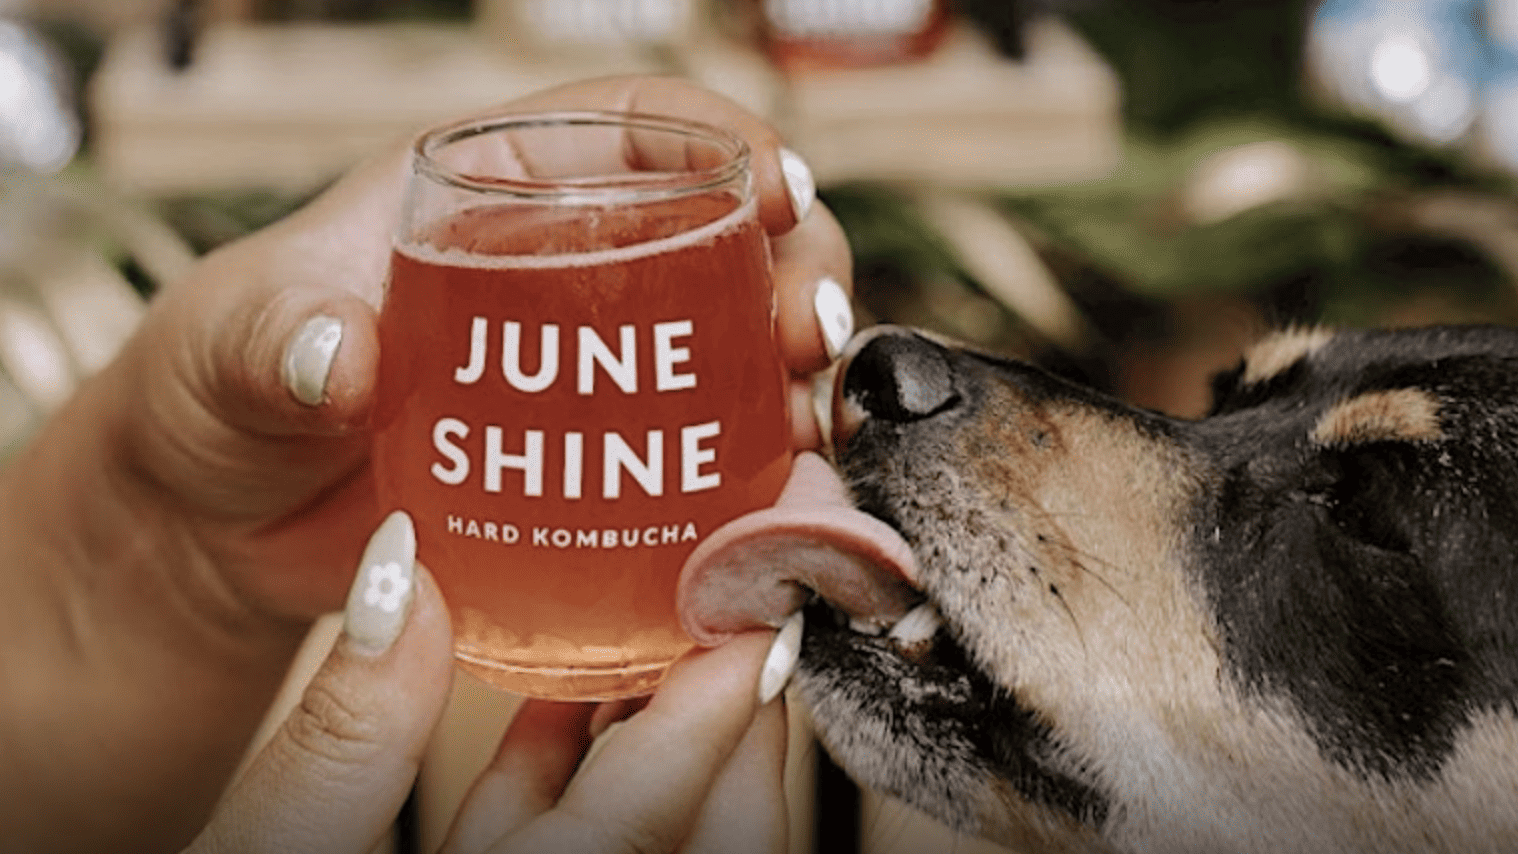 dog licks exterior of a glass of June Shine kombucha